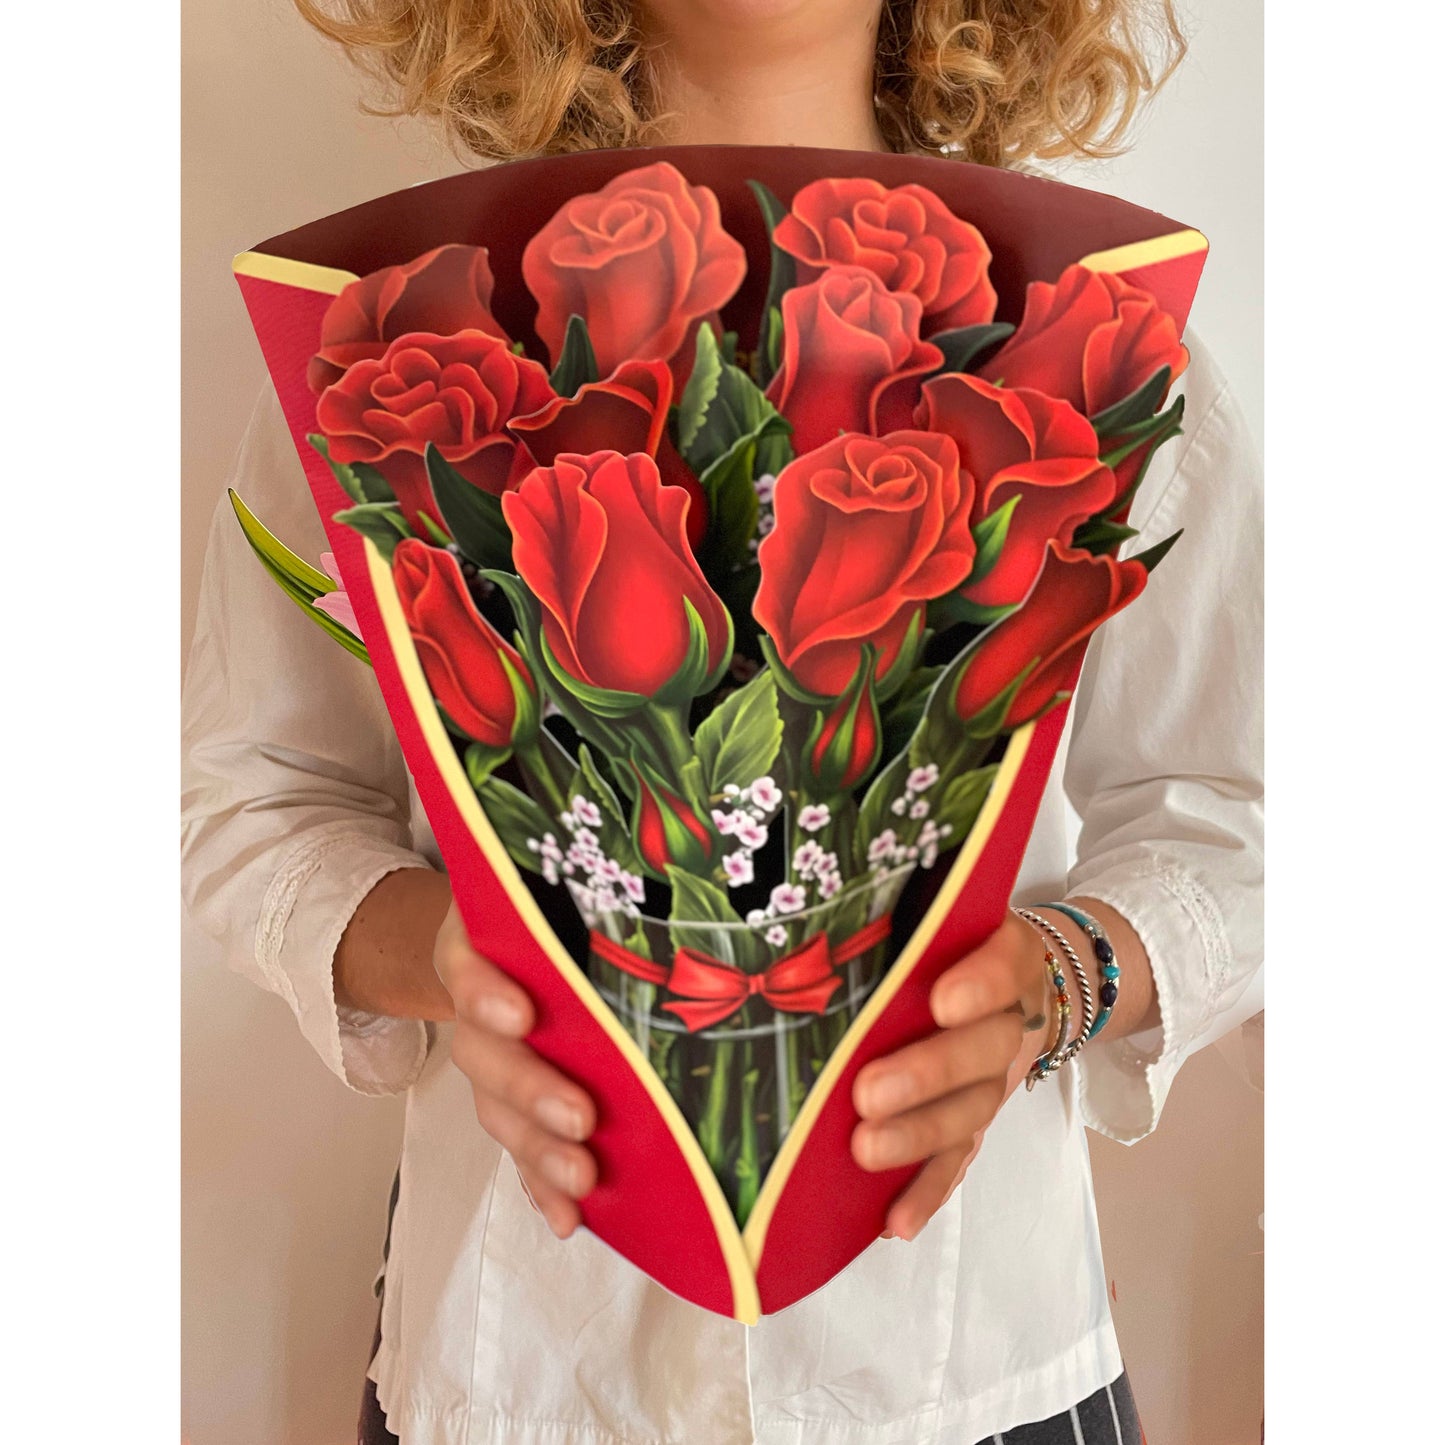 Pop Up Flower Card - Red Roses